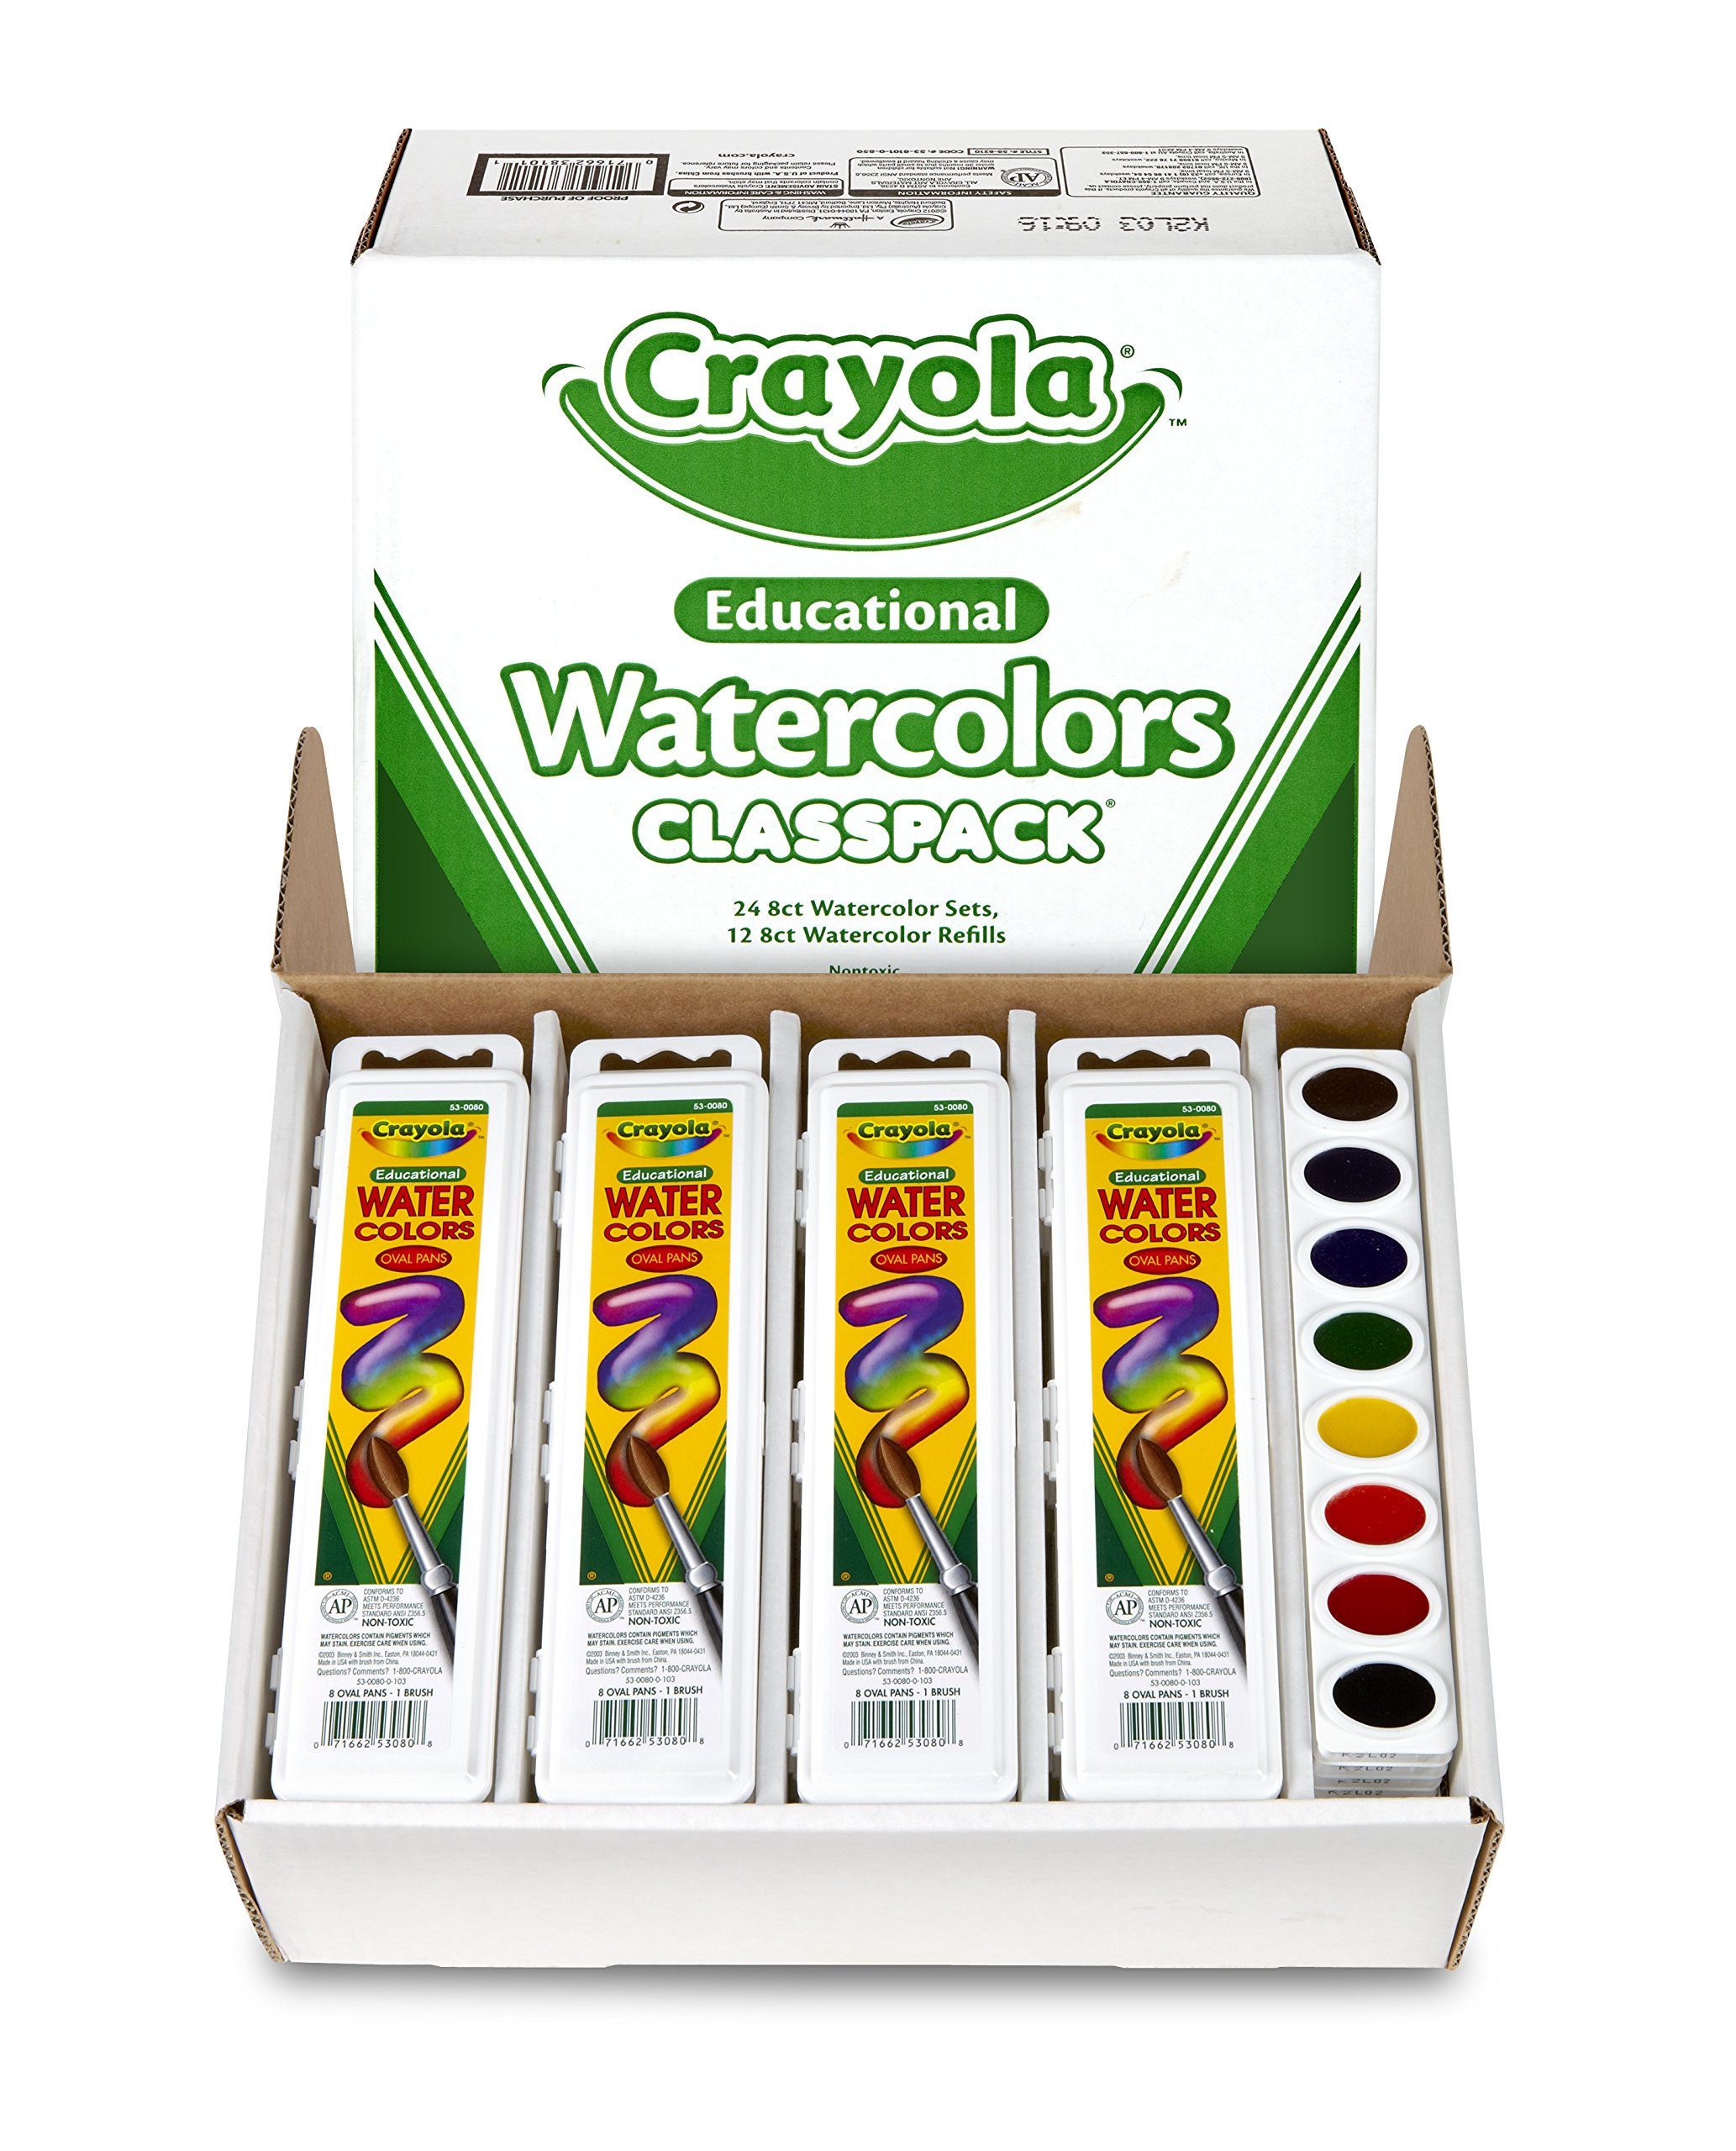 Crayola Watercolors Classpack, Bulk Paint Set For Kids, 24 Trays & 12 Refills, School Supplies